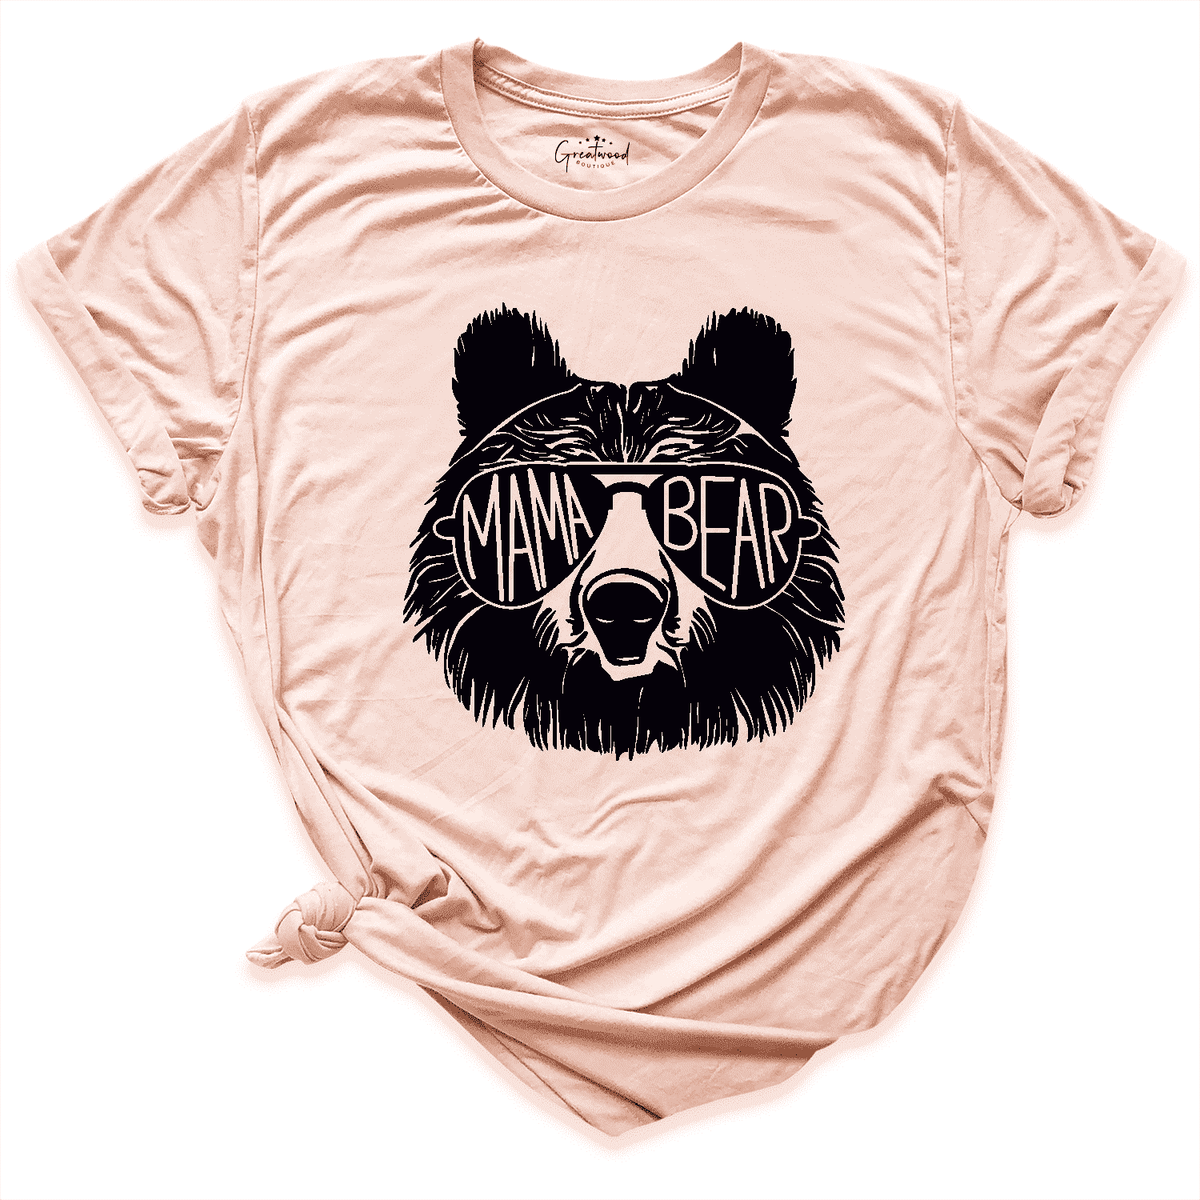 Mama Bear Shirt  Greatwood Boutique